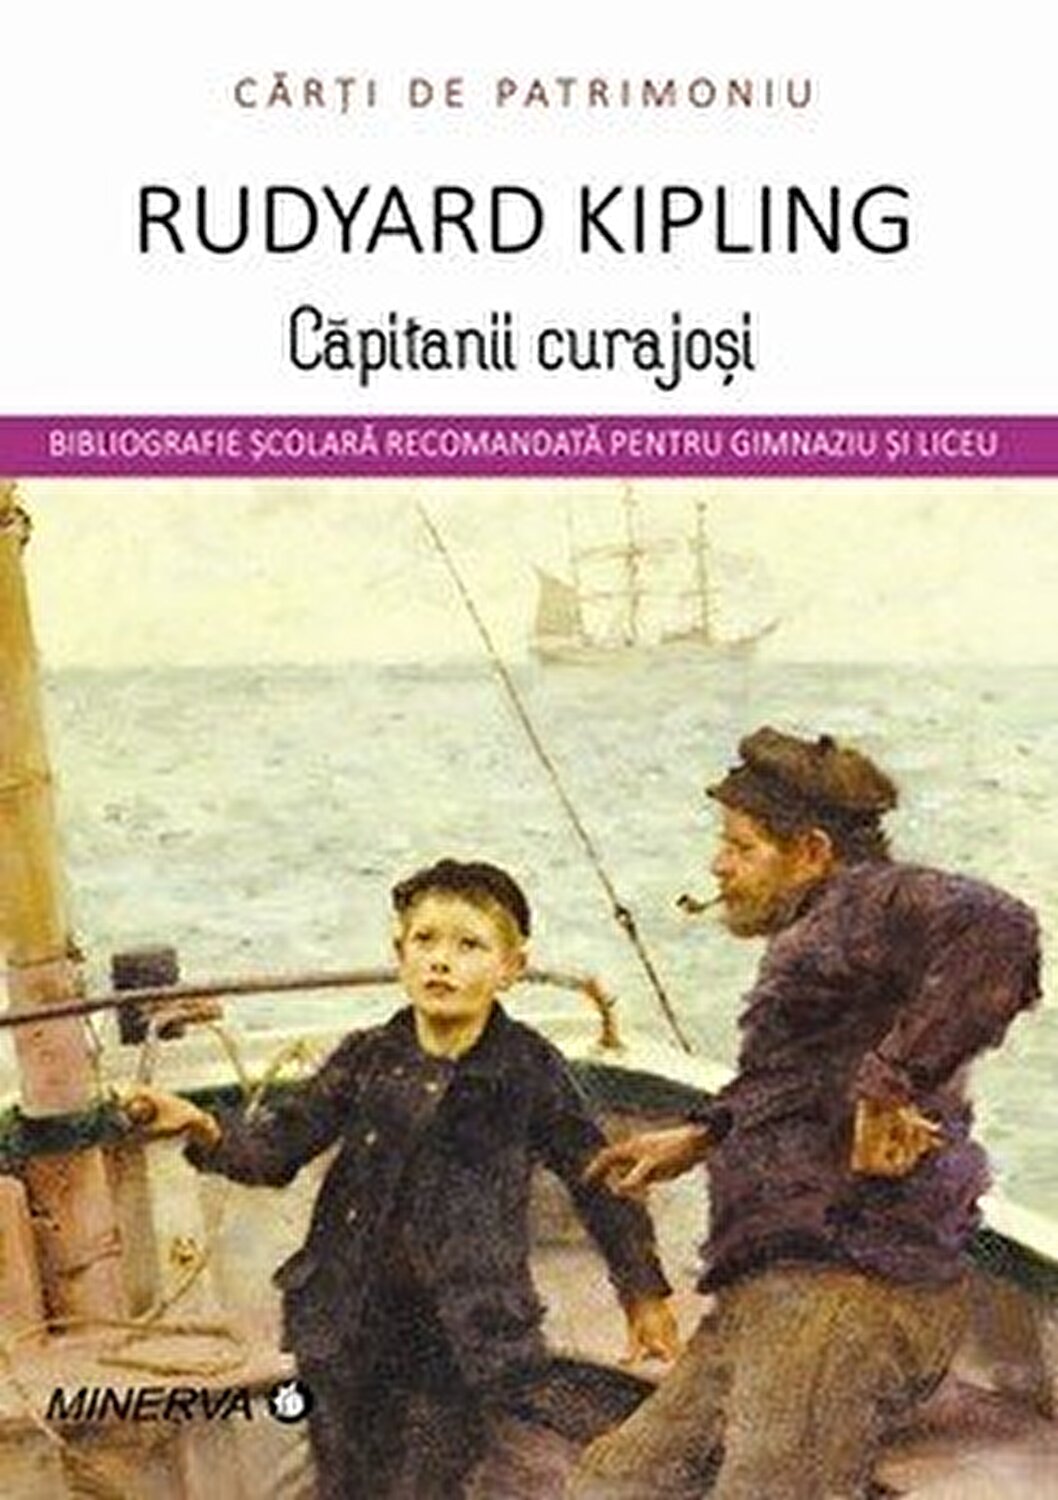 Capitanii curajosi | Rudyard Kipling carturesti.ro Bibliografie scolara